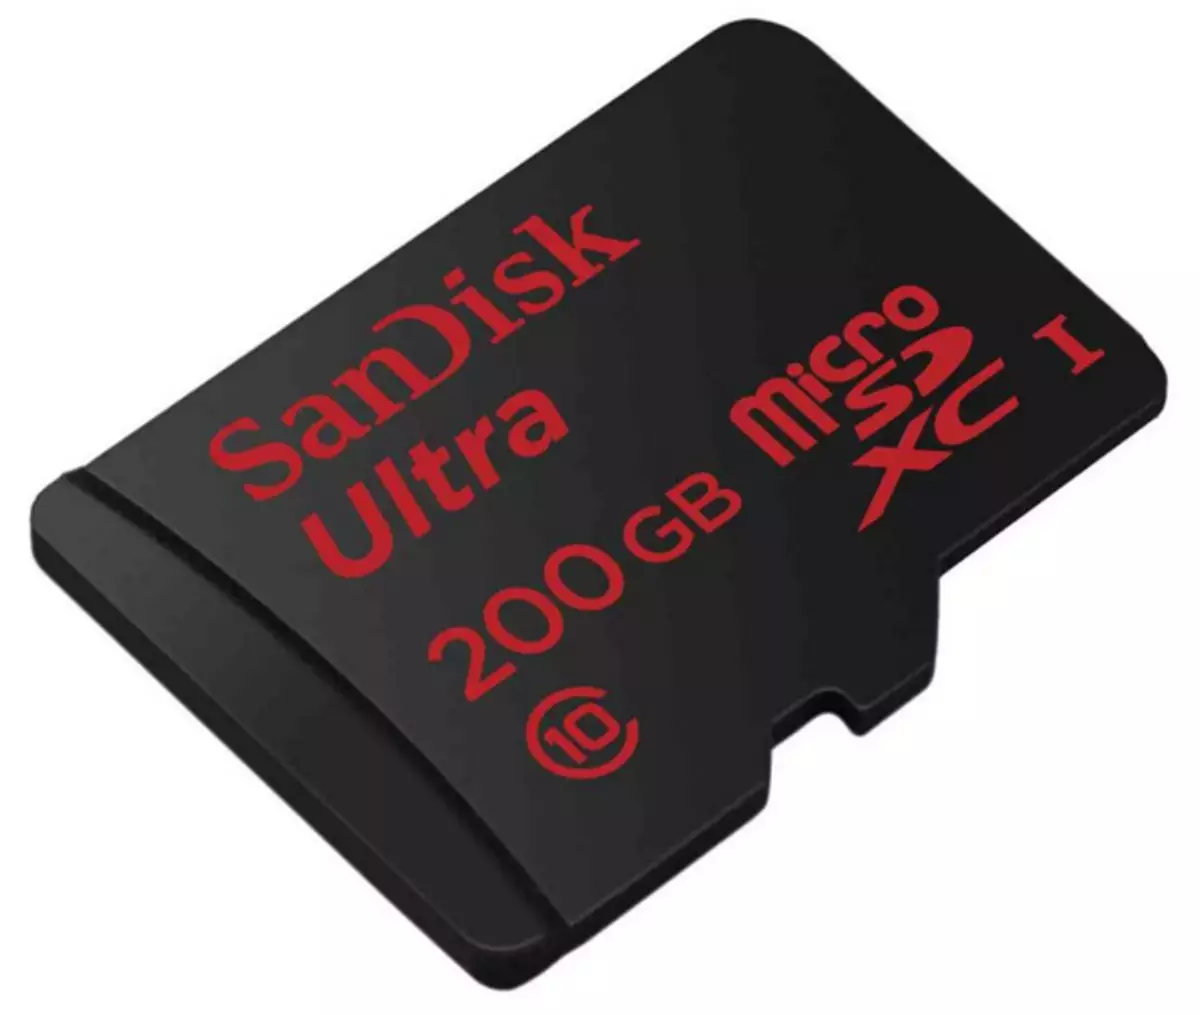 MicroSD example flash drive.